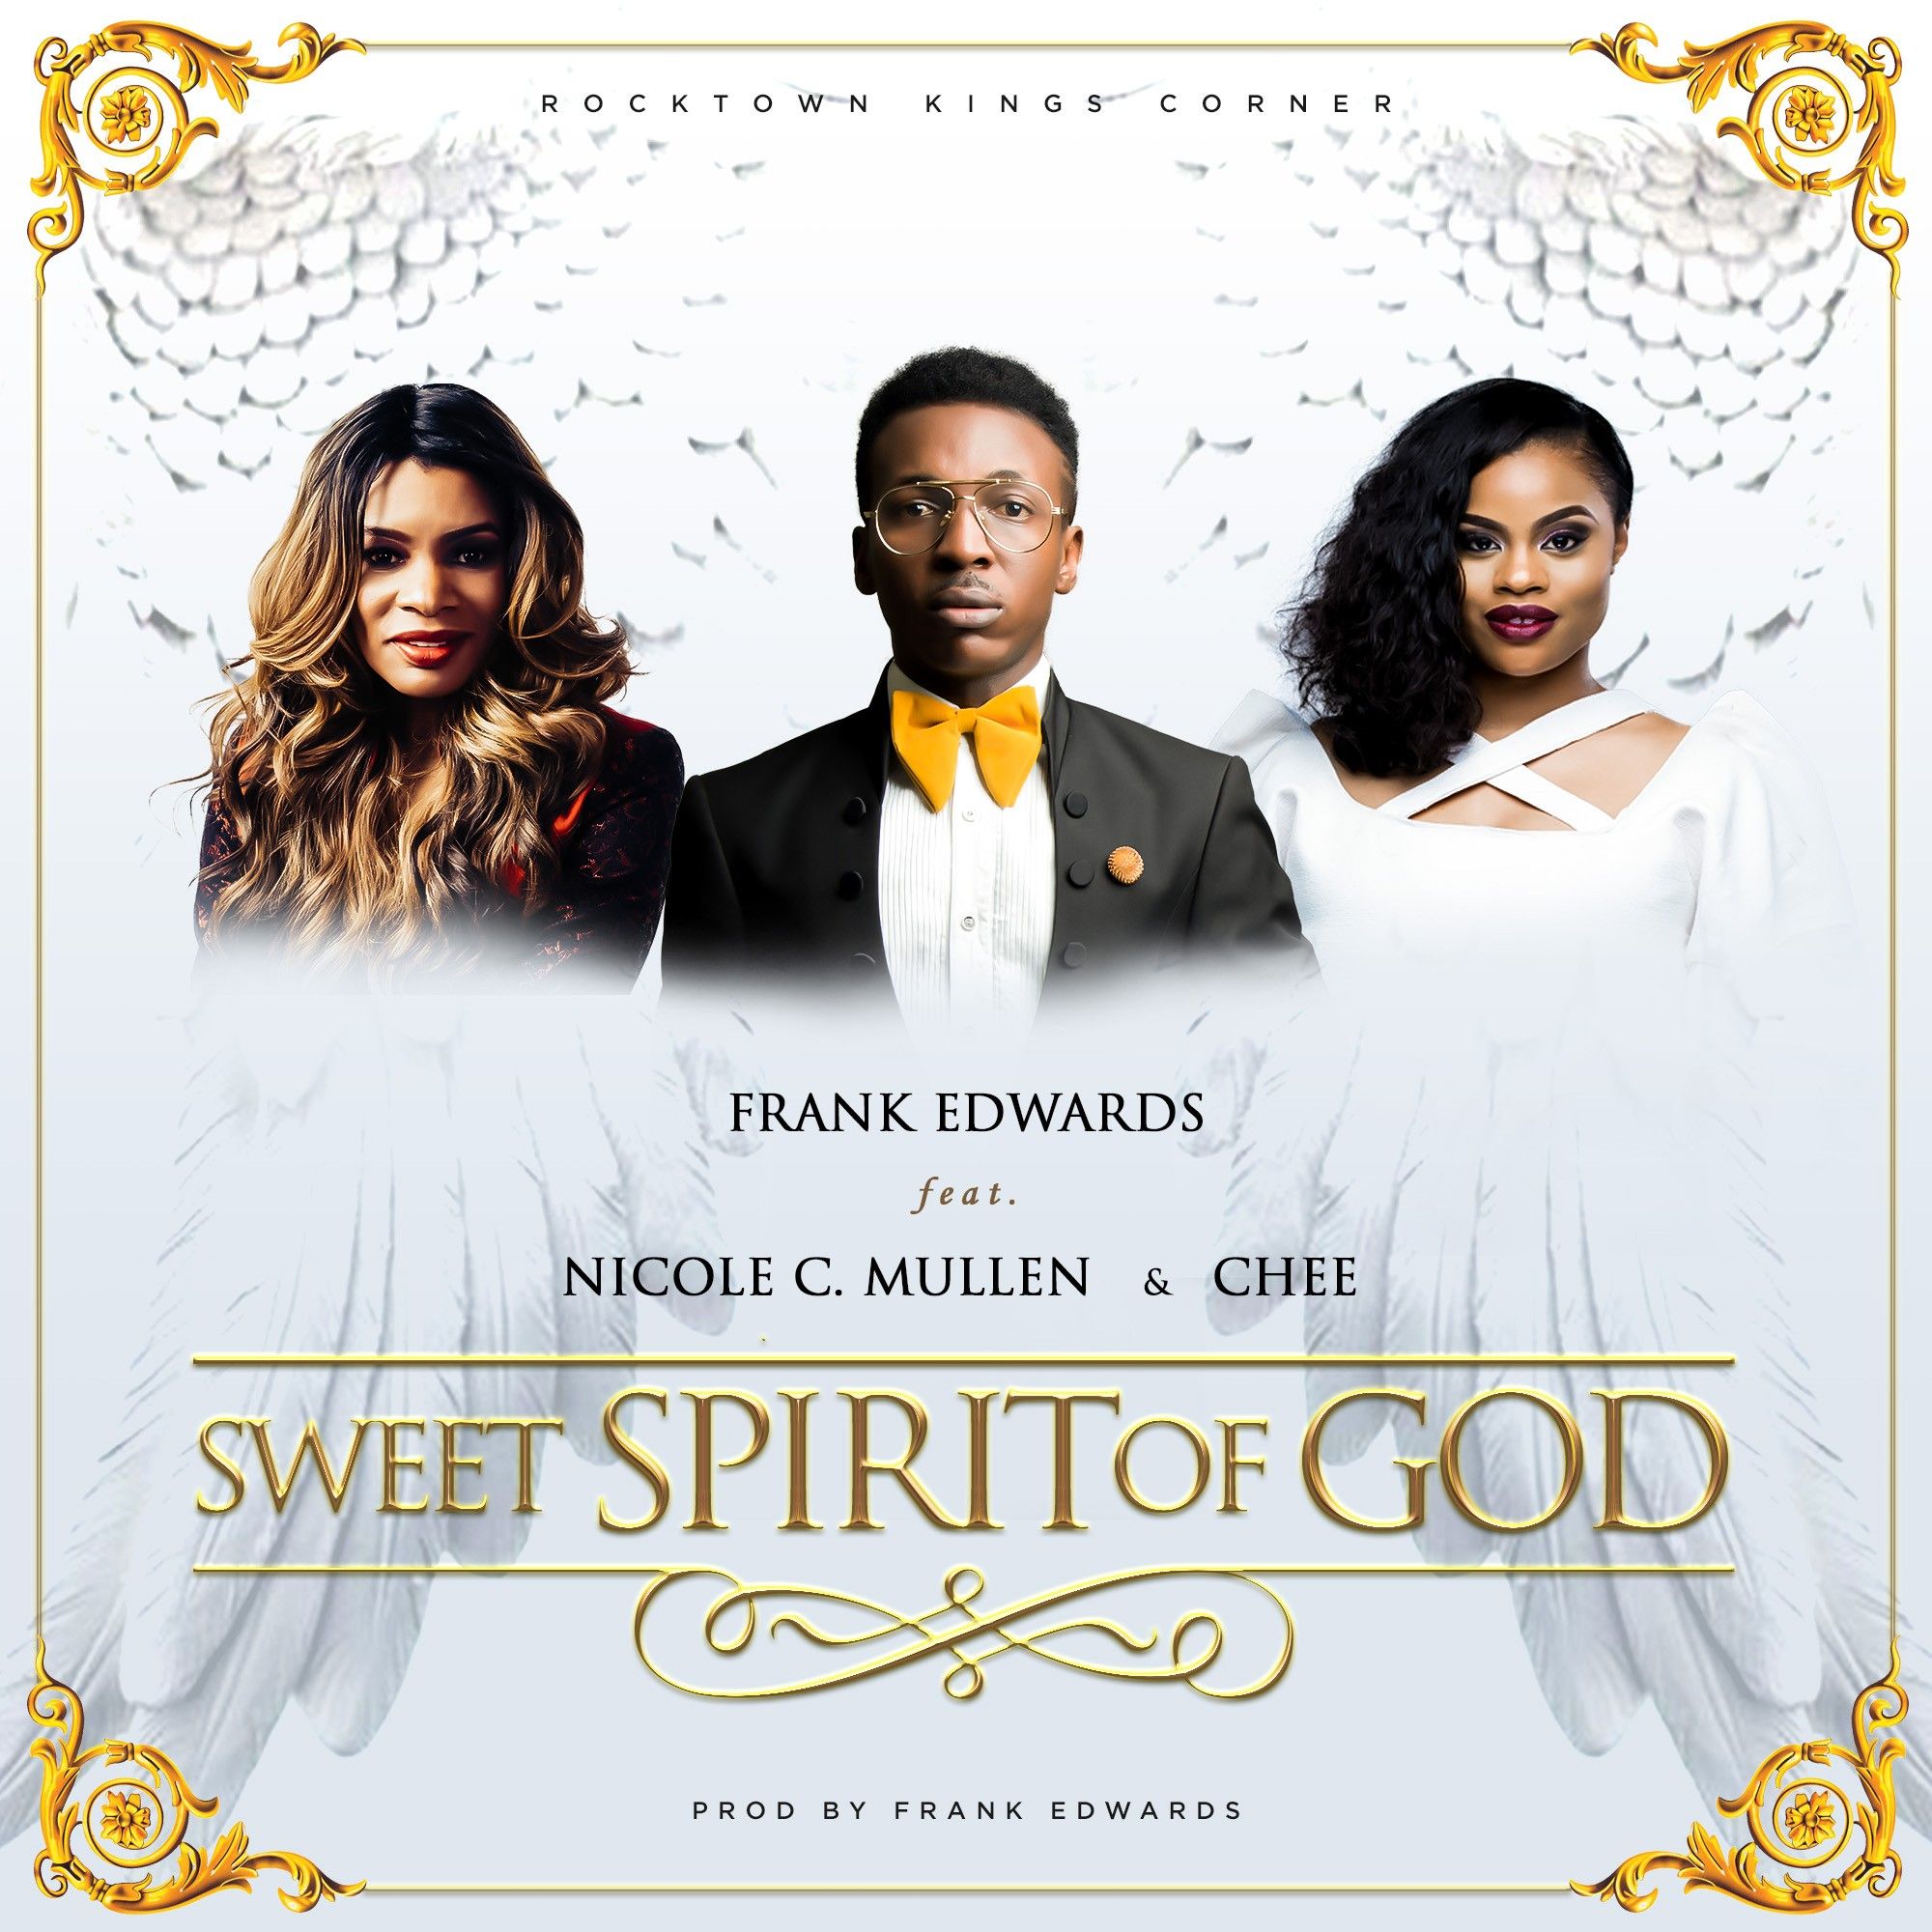 Frank Edwards ft. Nicole C. Mullen & Chee - SWEET SPIRIT OF GOD Artwork | AceWorldTeam.com